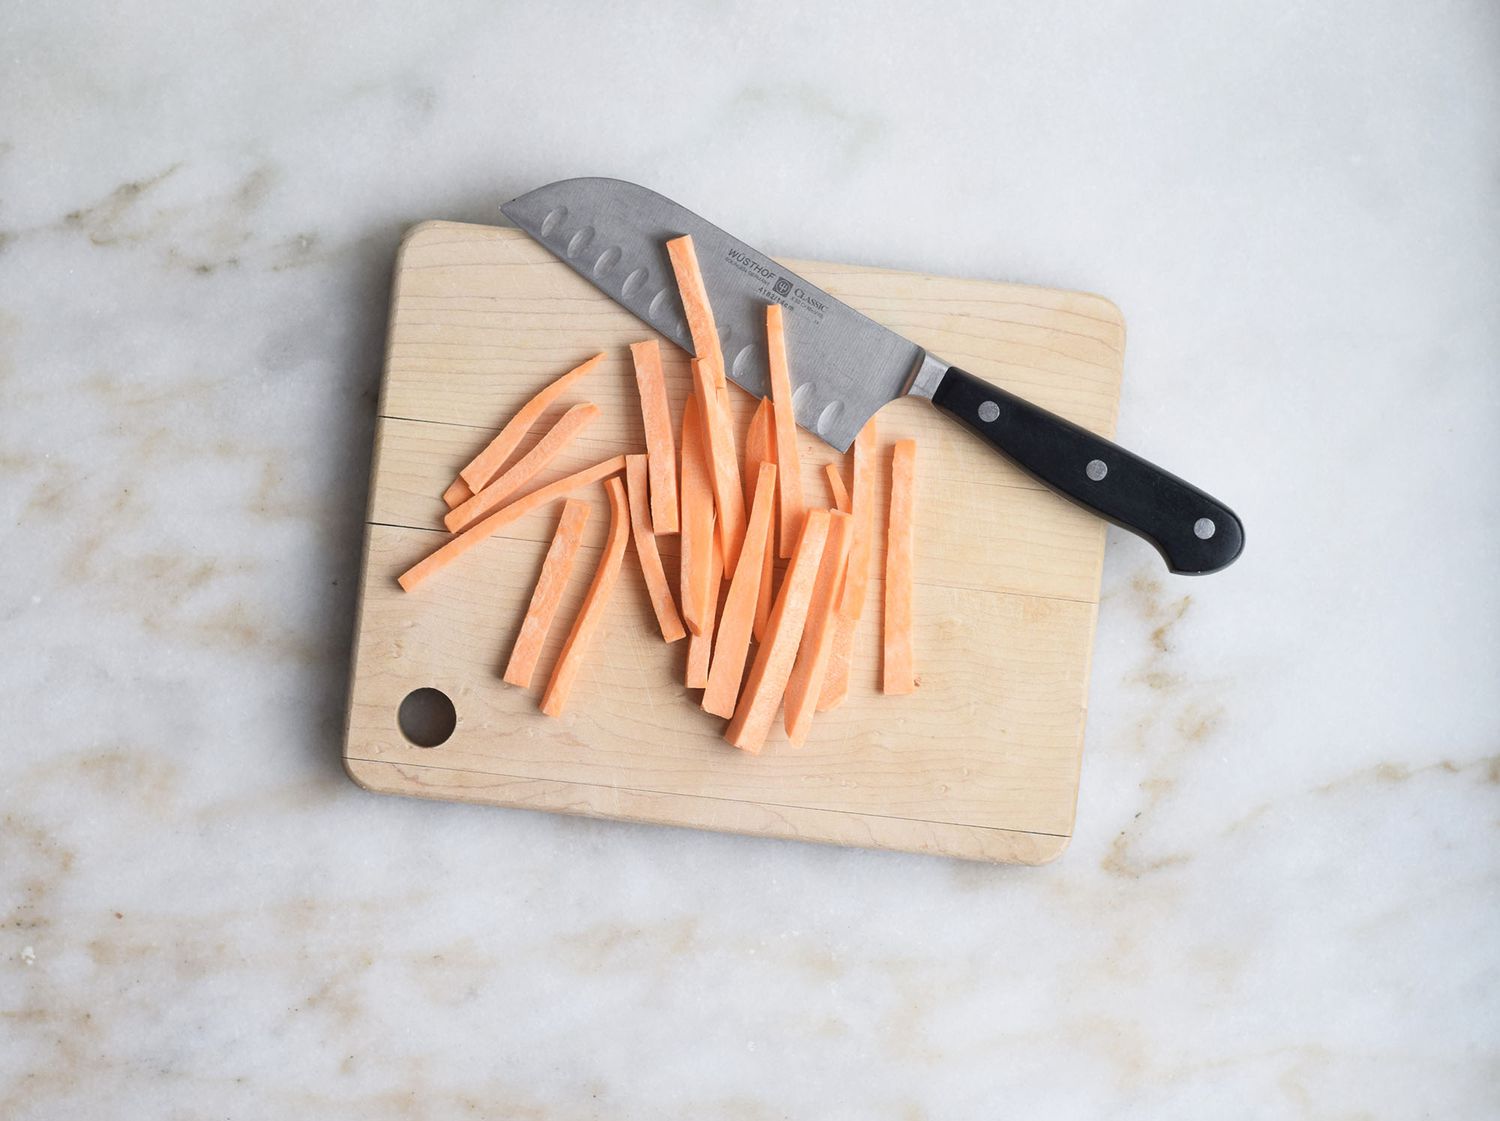 Sweet potatoes cut into matchsticks on a cutting board